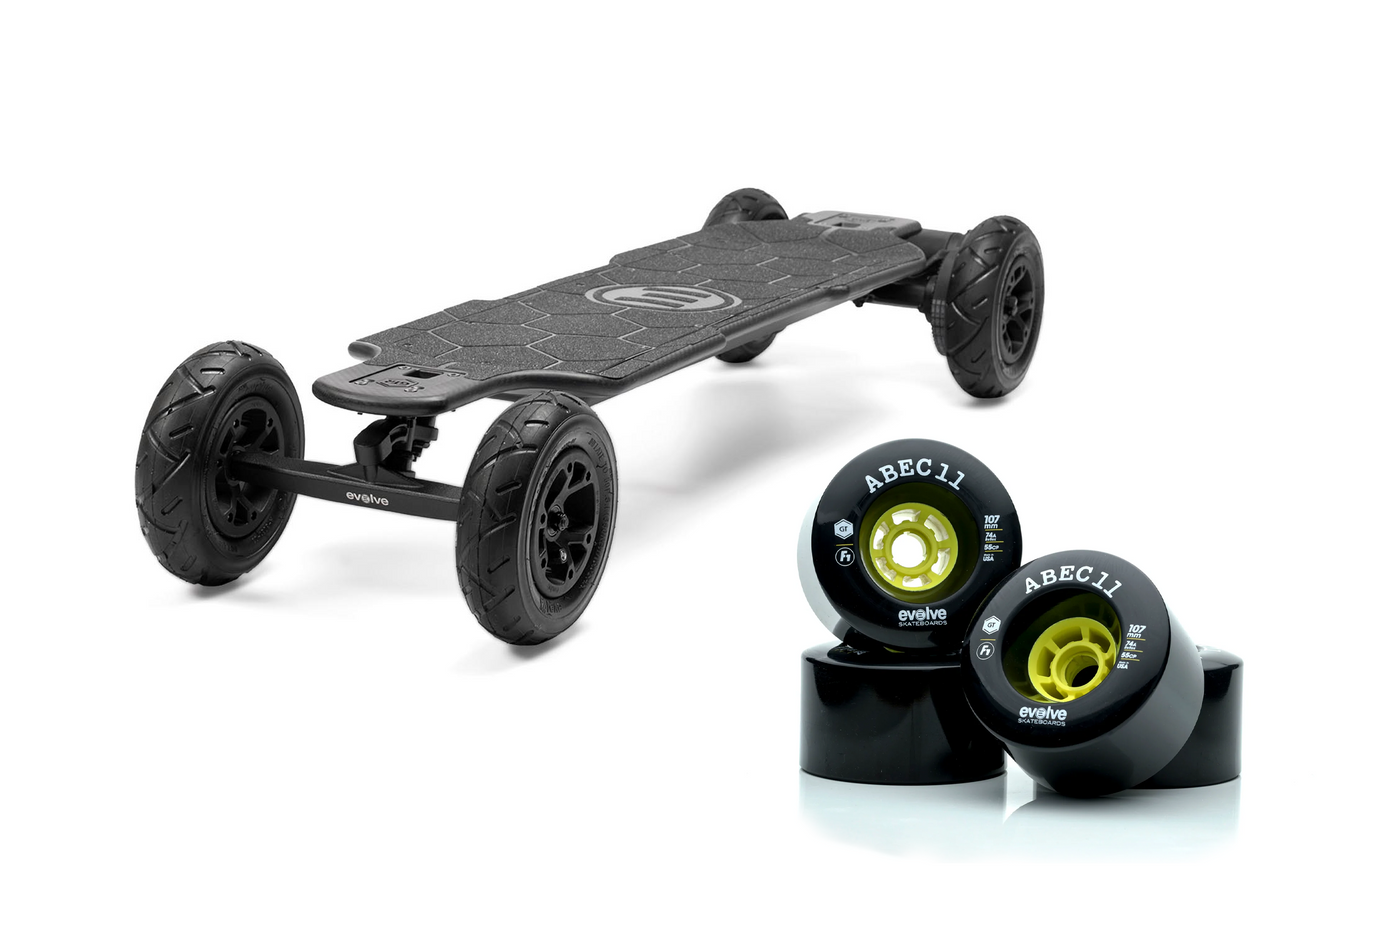 GTR Carbon Electric Skateboard 2 in 1 Series 2